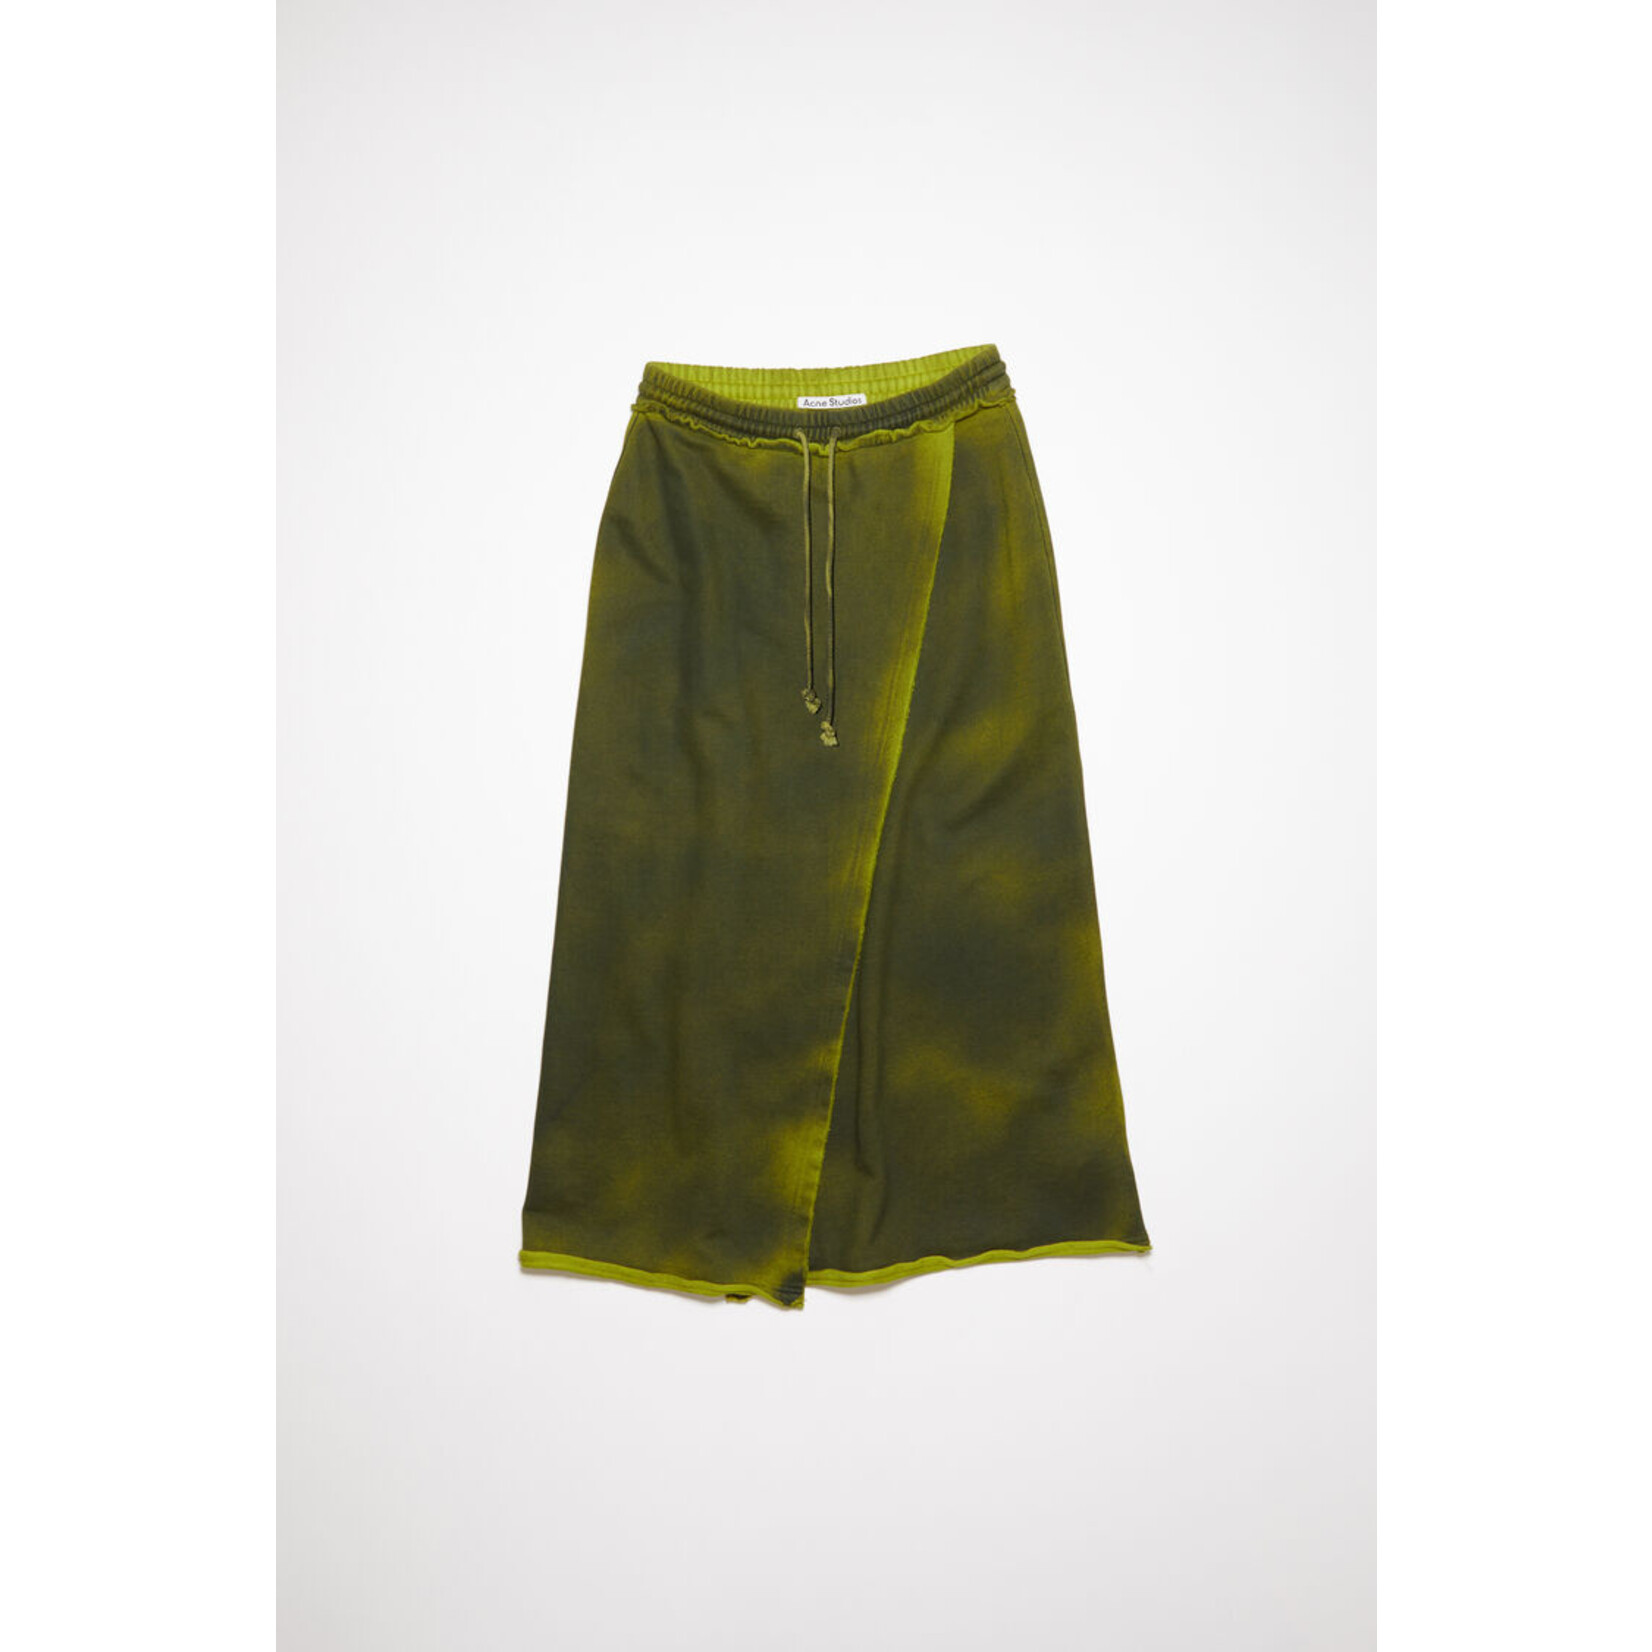 Acne Studios Acnestudios dyed fleece skirt, acid yellow ,s